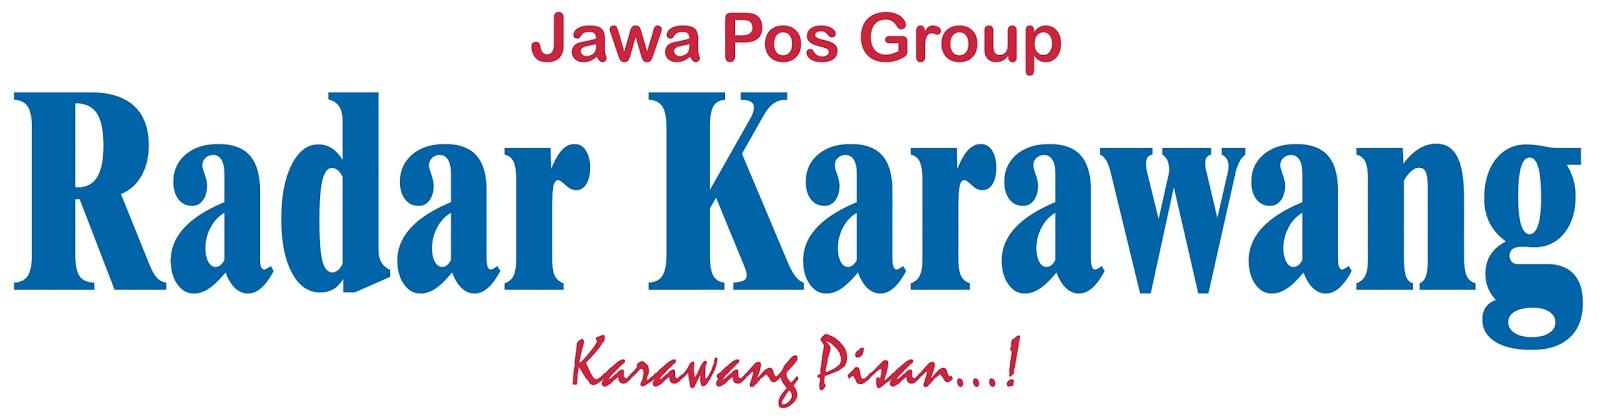 Logo-Radar-Karawang.jpg (1)